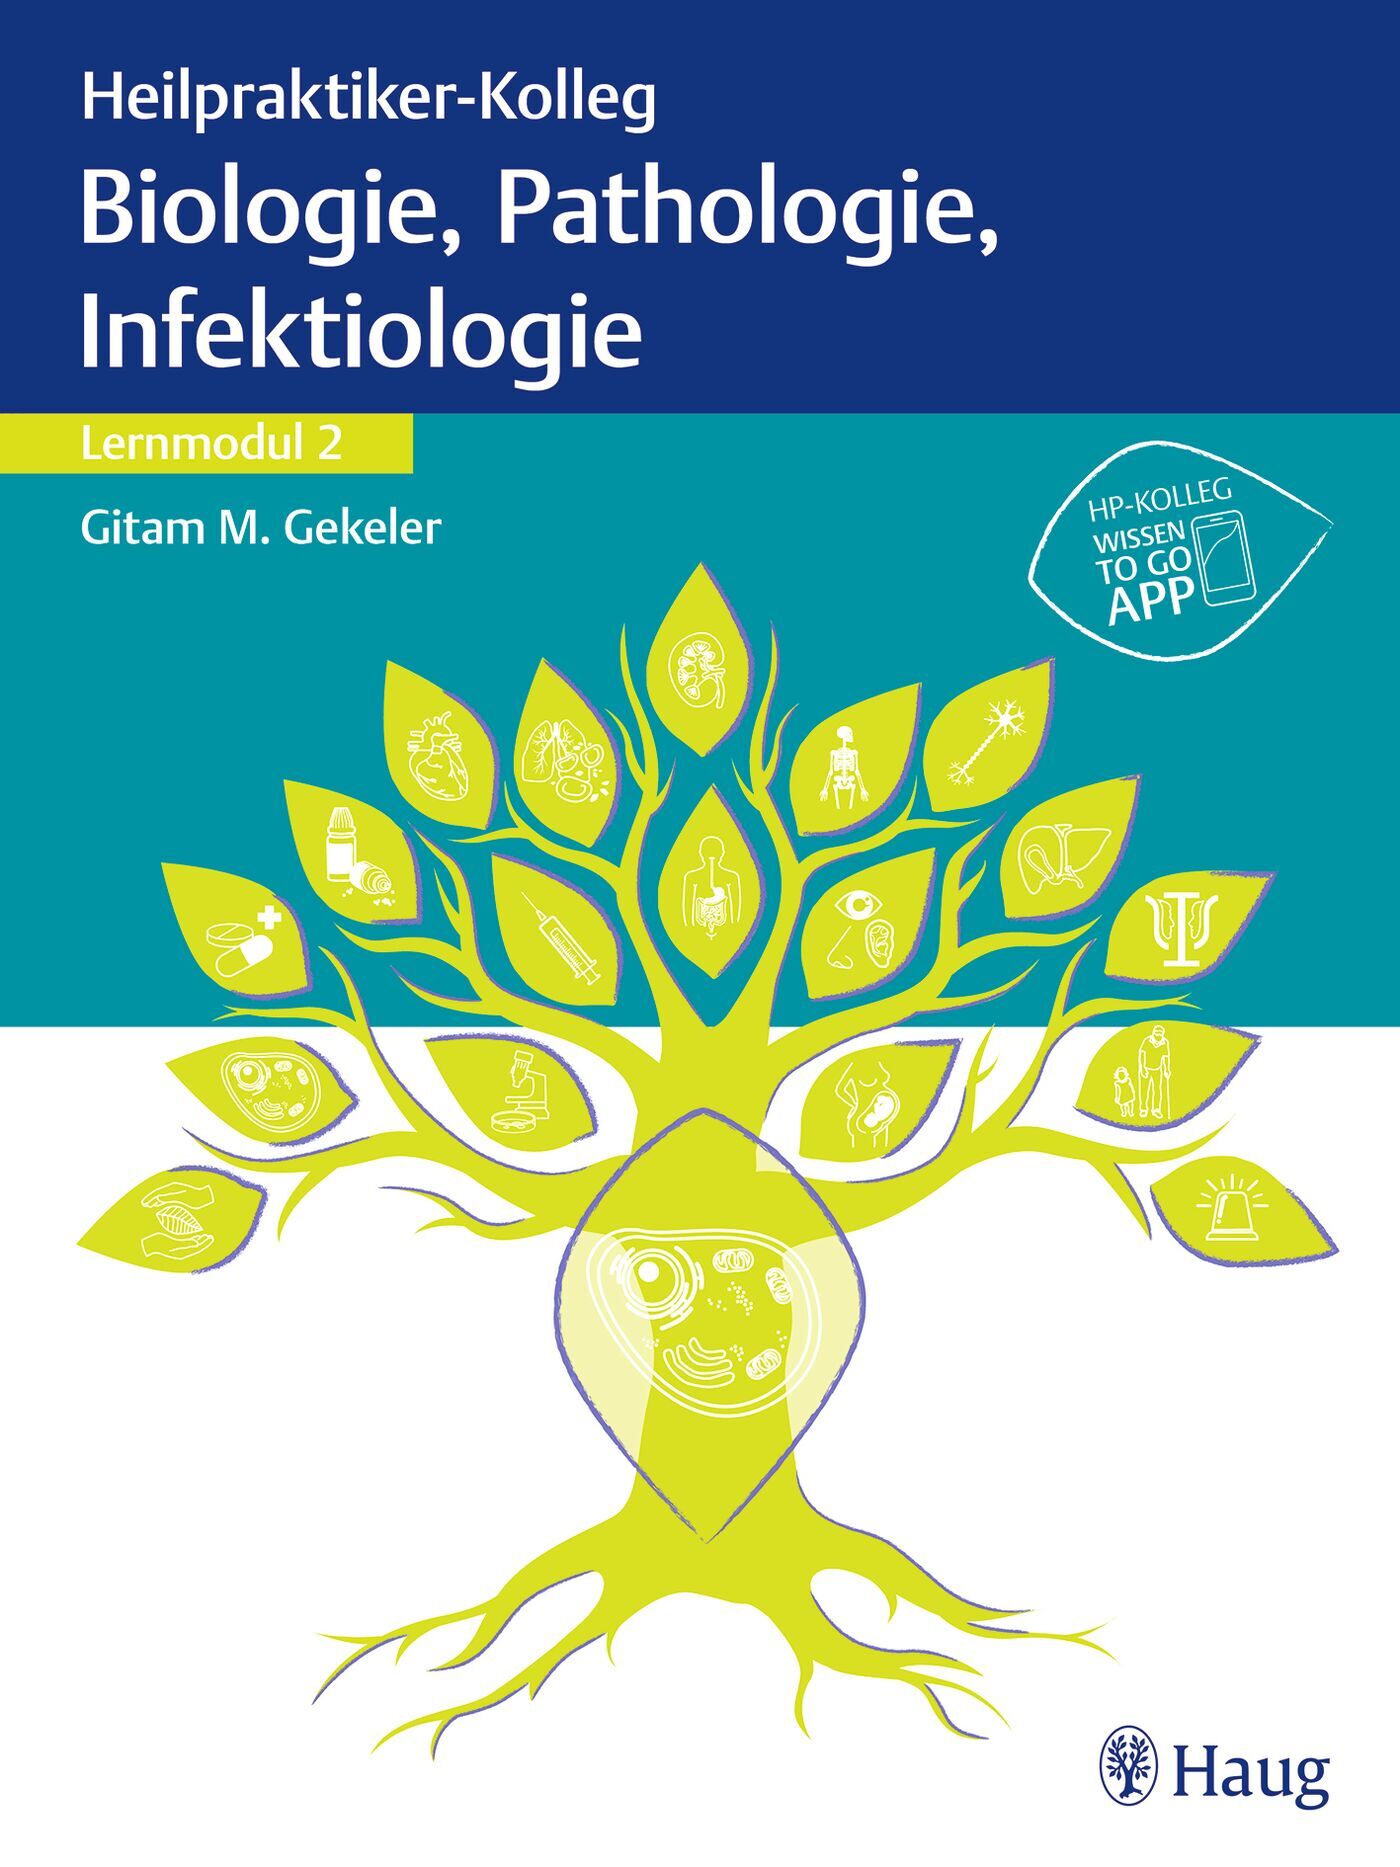 Heilpraktiker-Kolleg - Biologie, Pathologie, Infektiologie – Lernmodul 2, 9783132439719